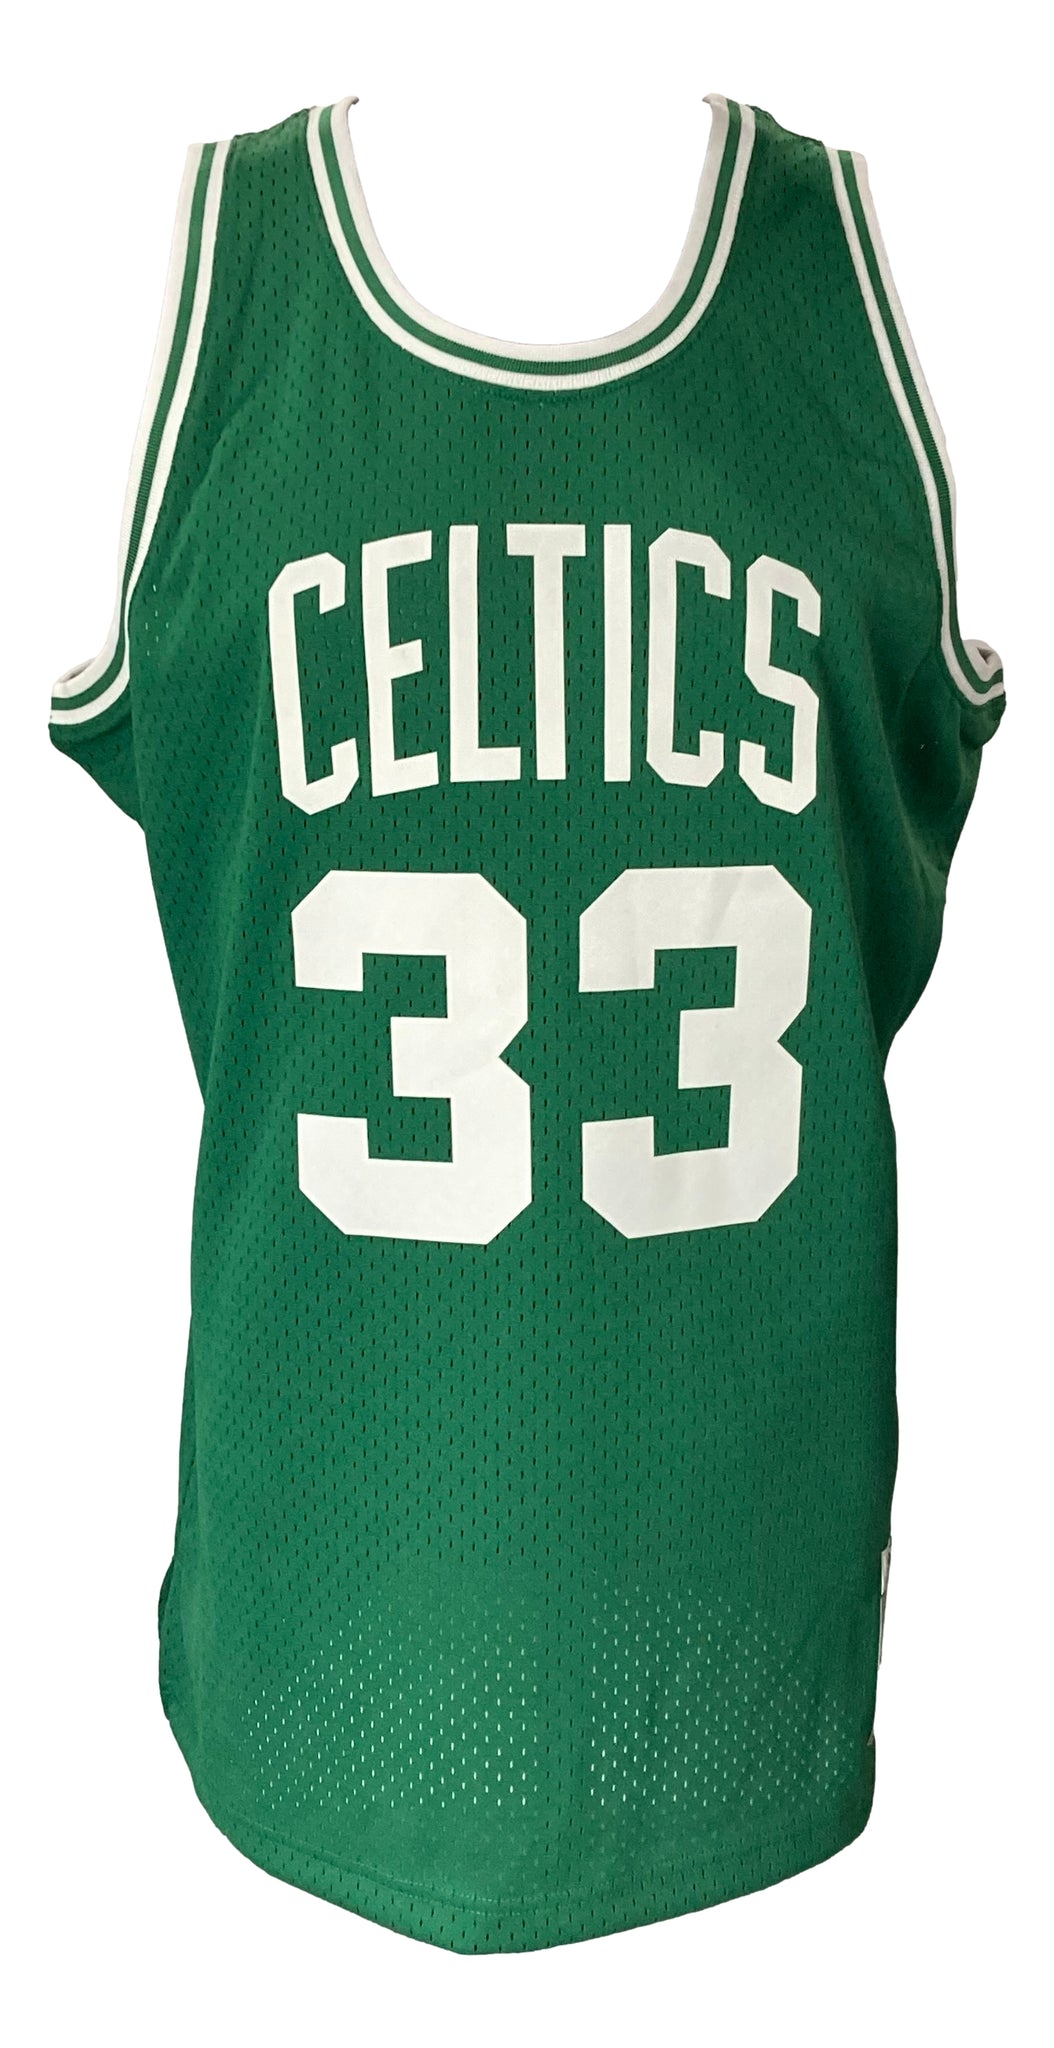 NBA Boston Celtics Larry Bird Swingman Jersey, Green